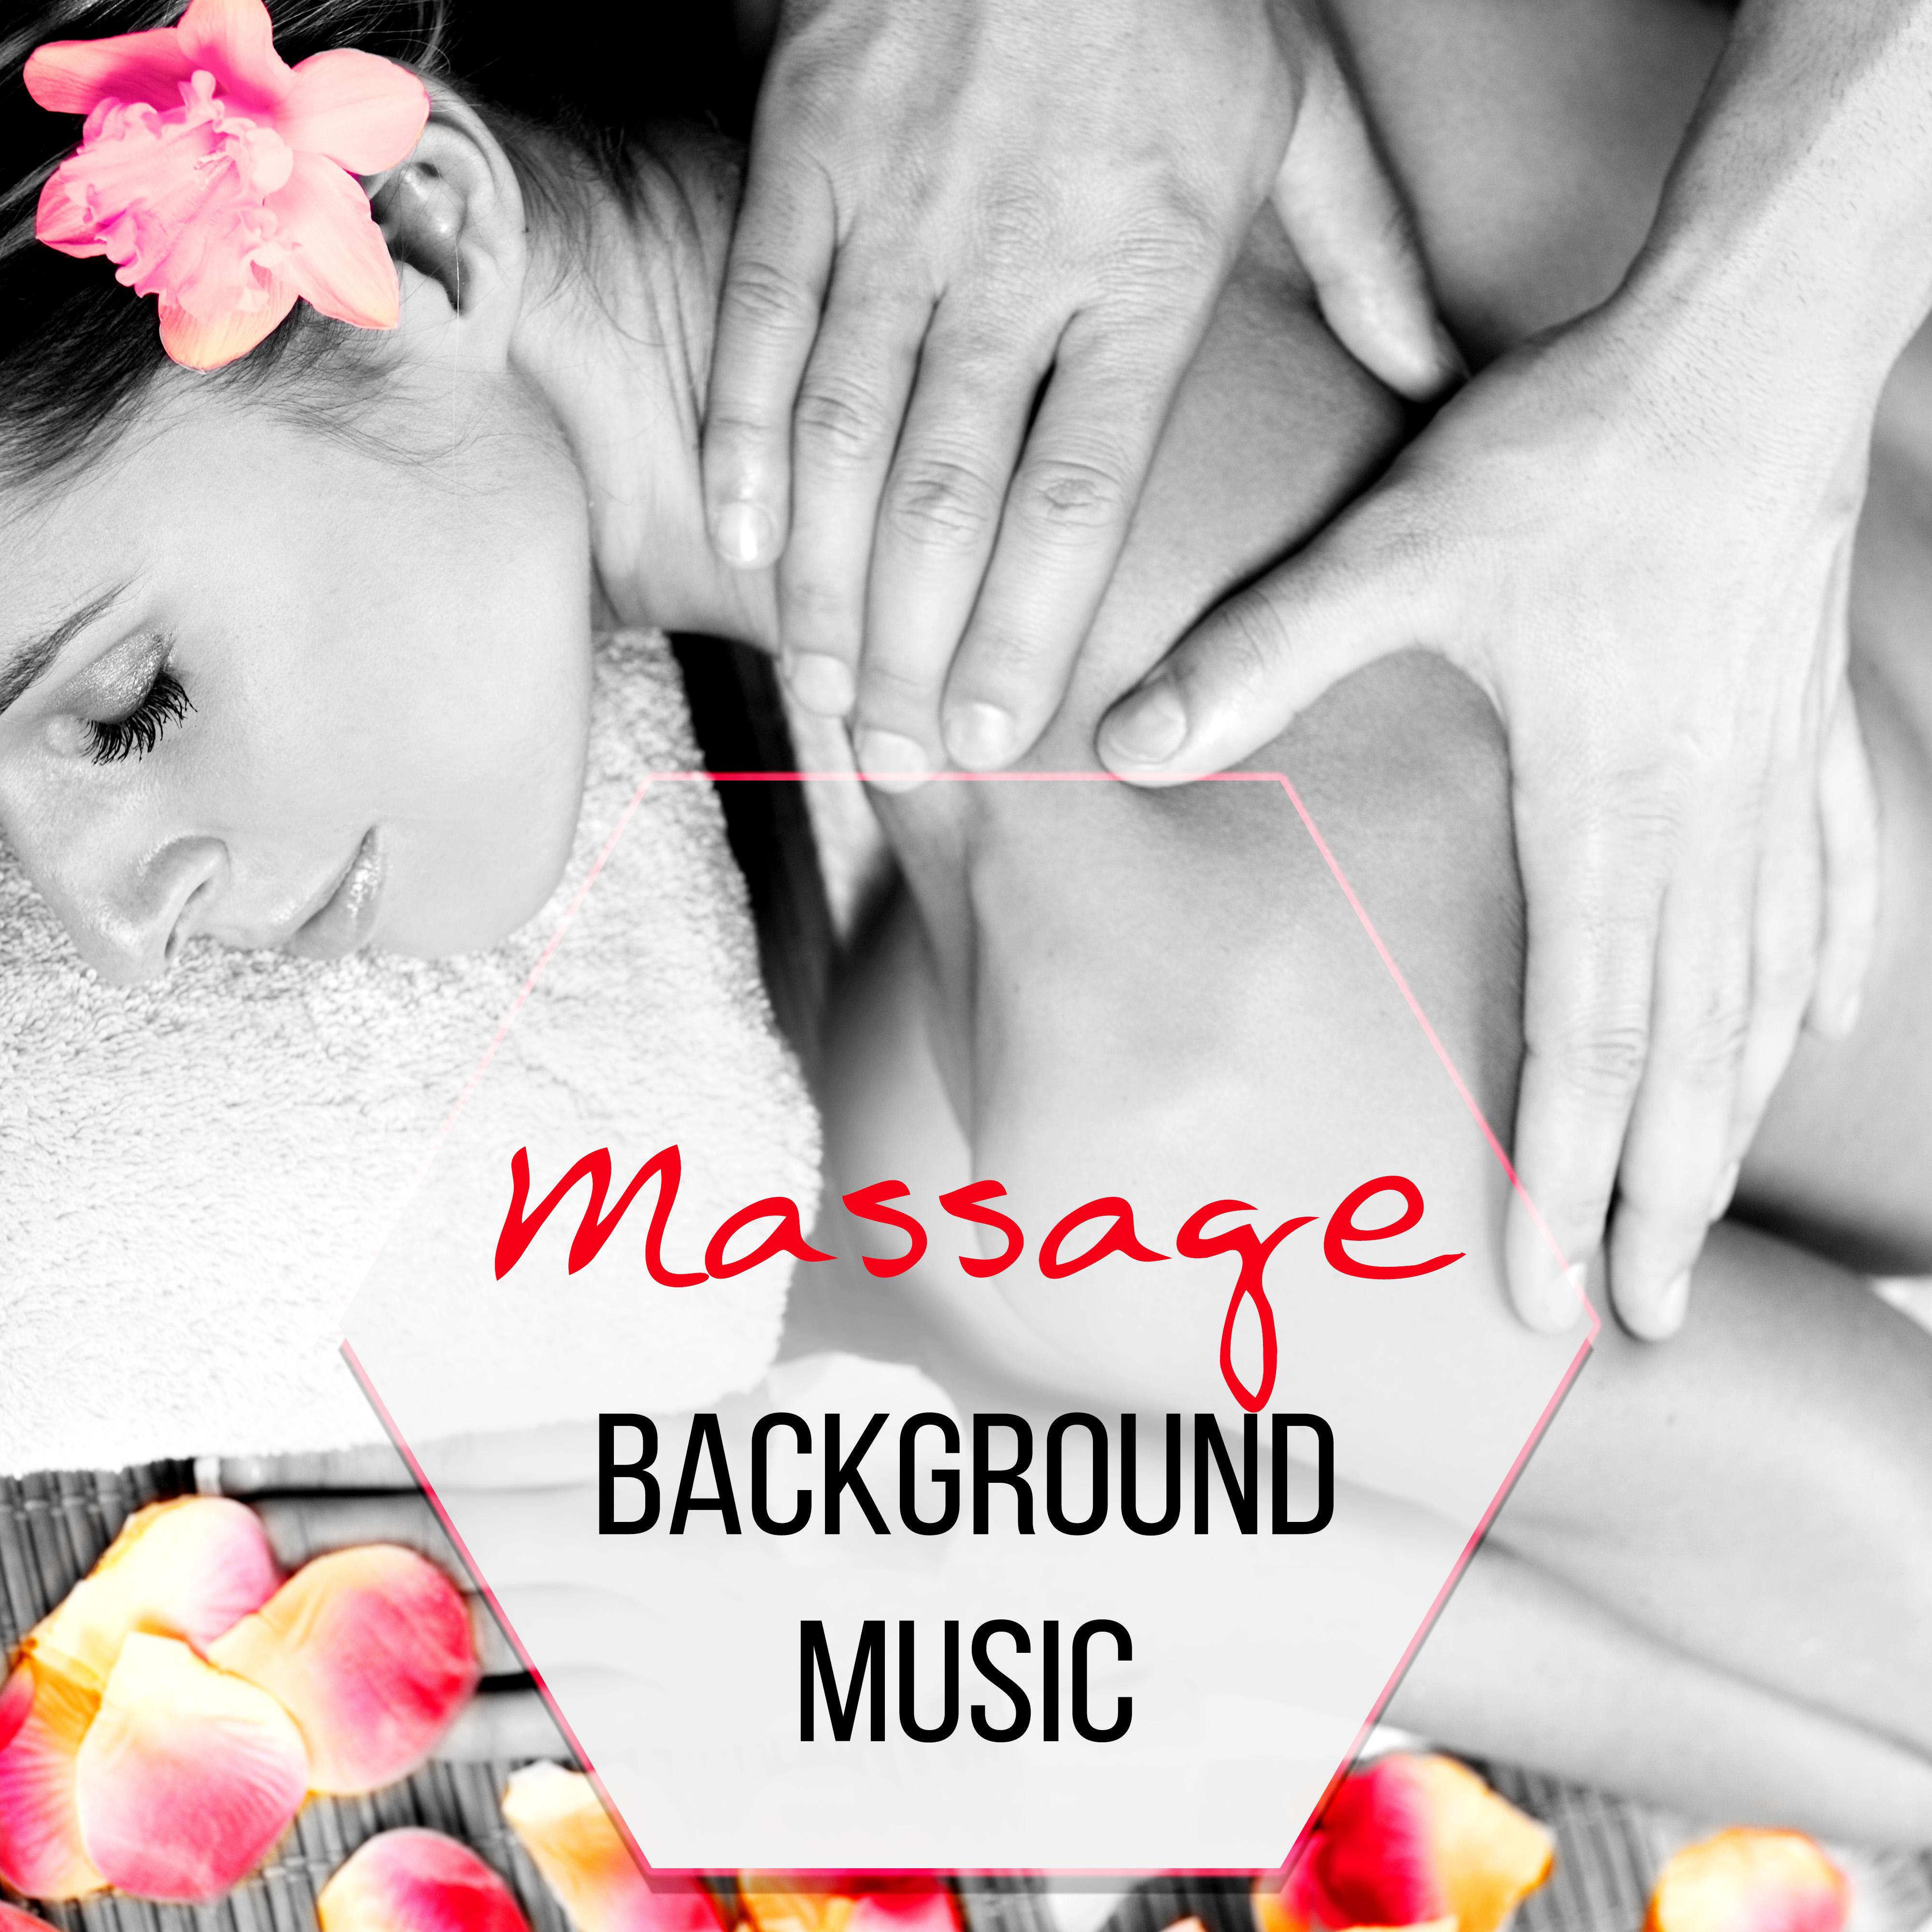 Massage Background Music – Relaxing Nature Sounds for Spa & Wellness Center, Ocean Waves, Birds, Crickets, Water Sounds, Falling Rain